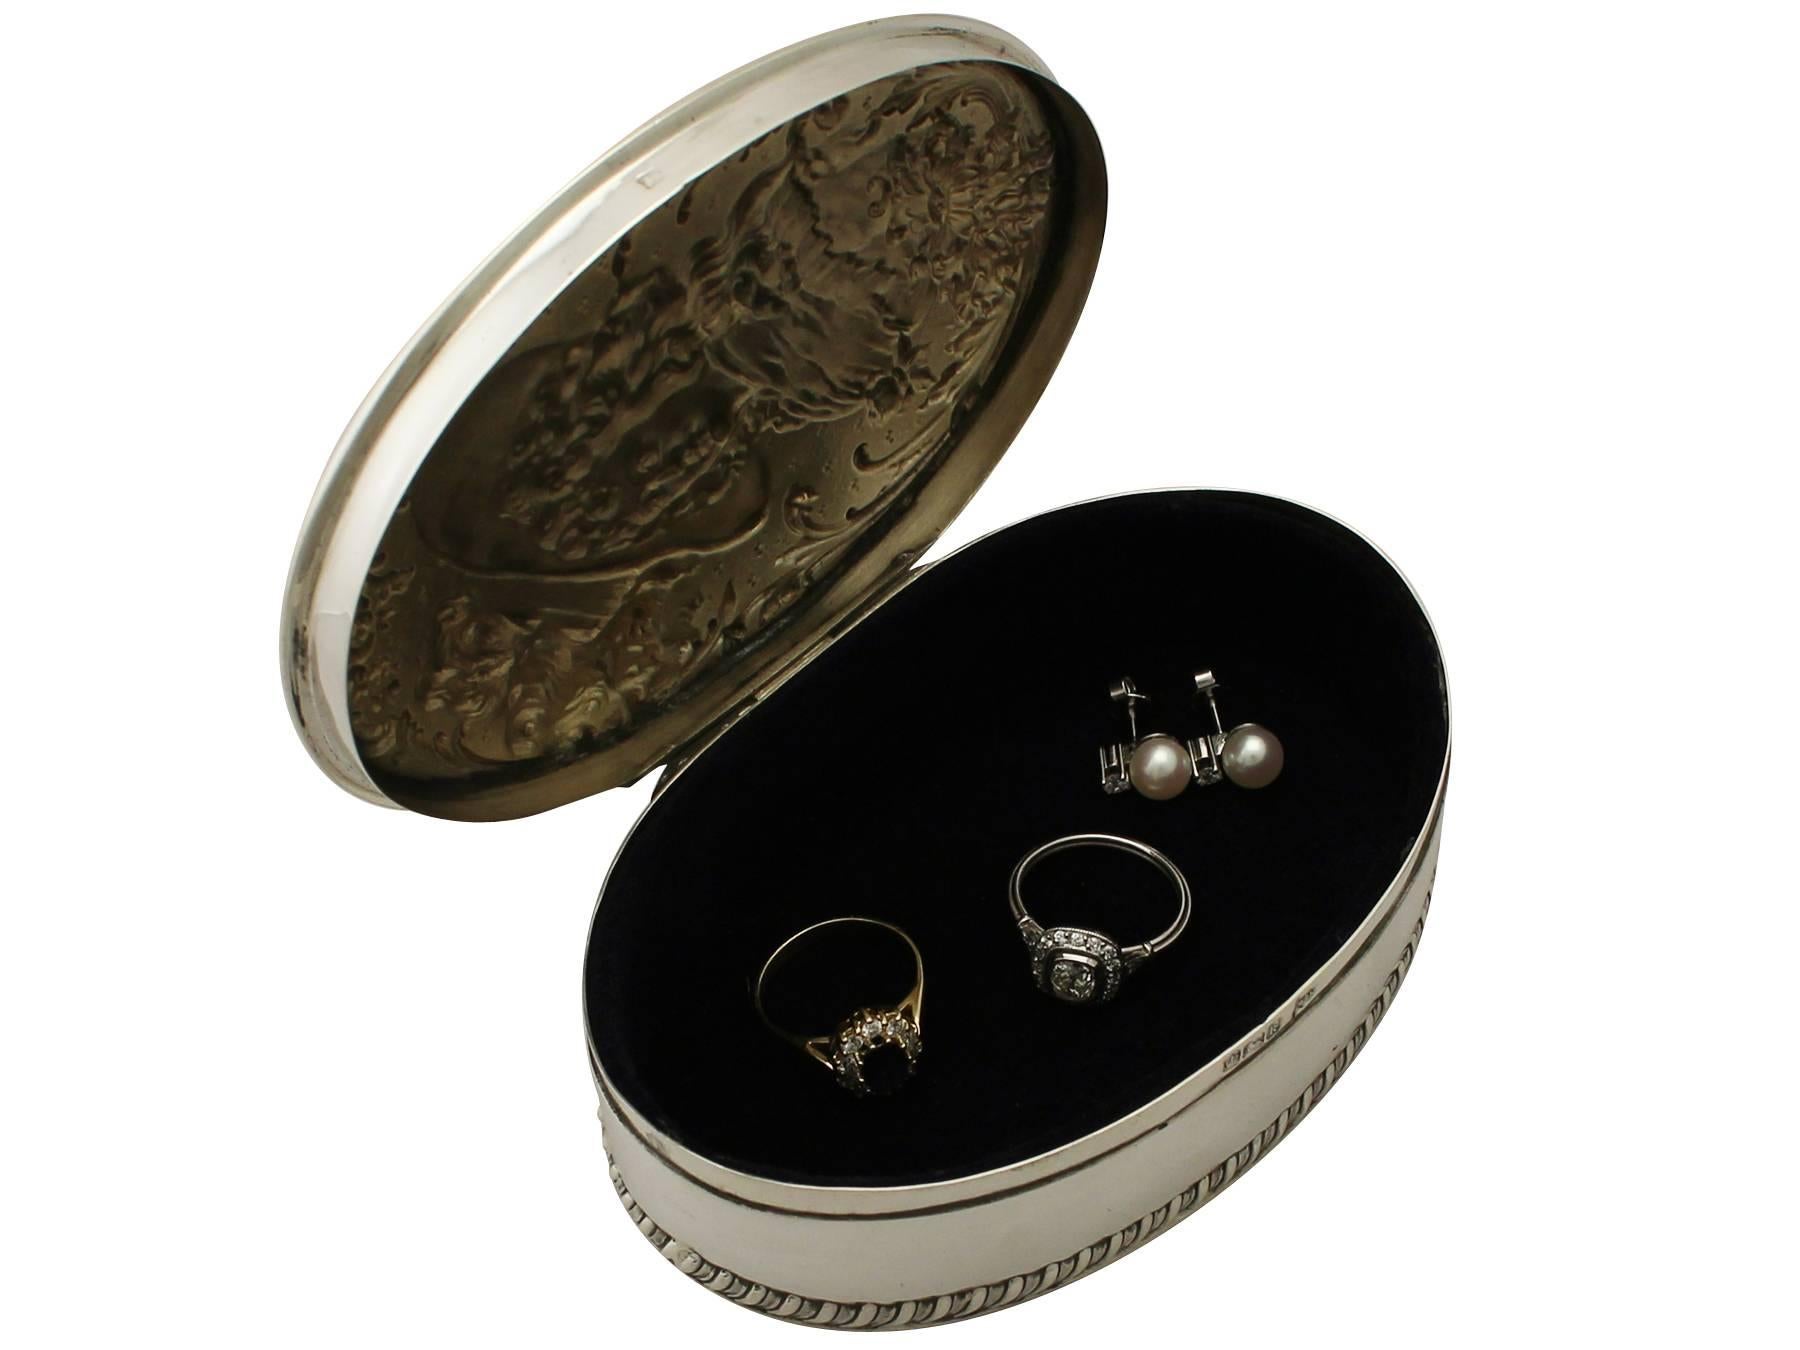 Sterling Silver Jewelry/Trinket Box, Art Nouveau Style, Antique Edwardian 1